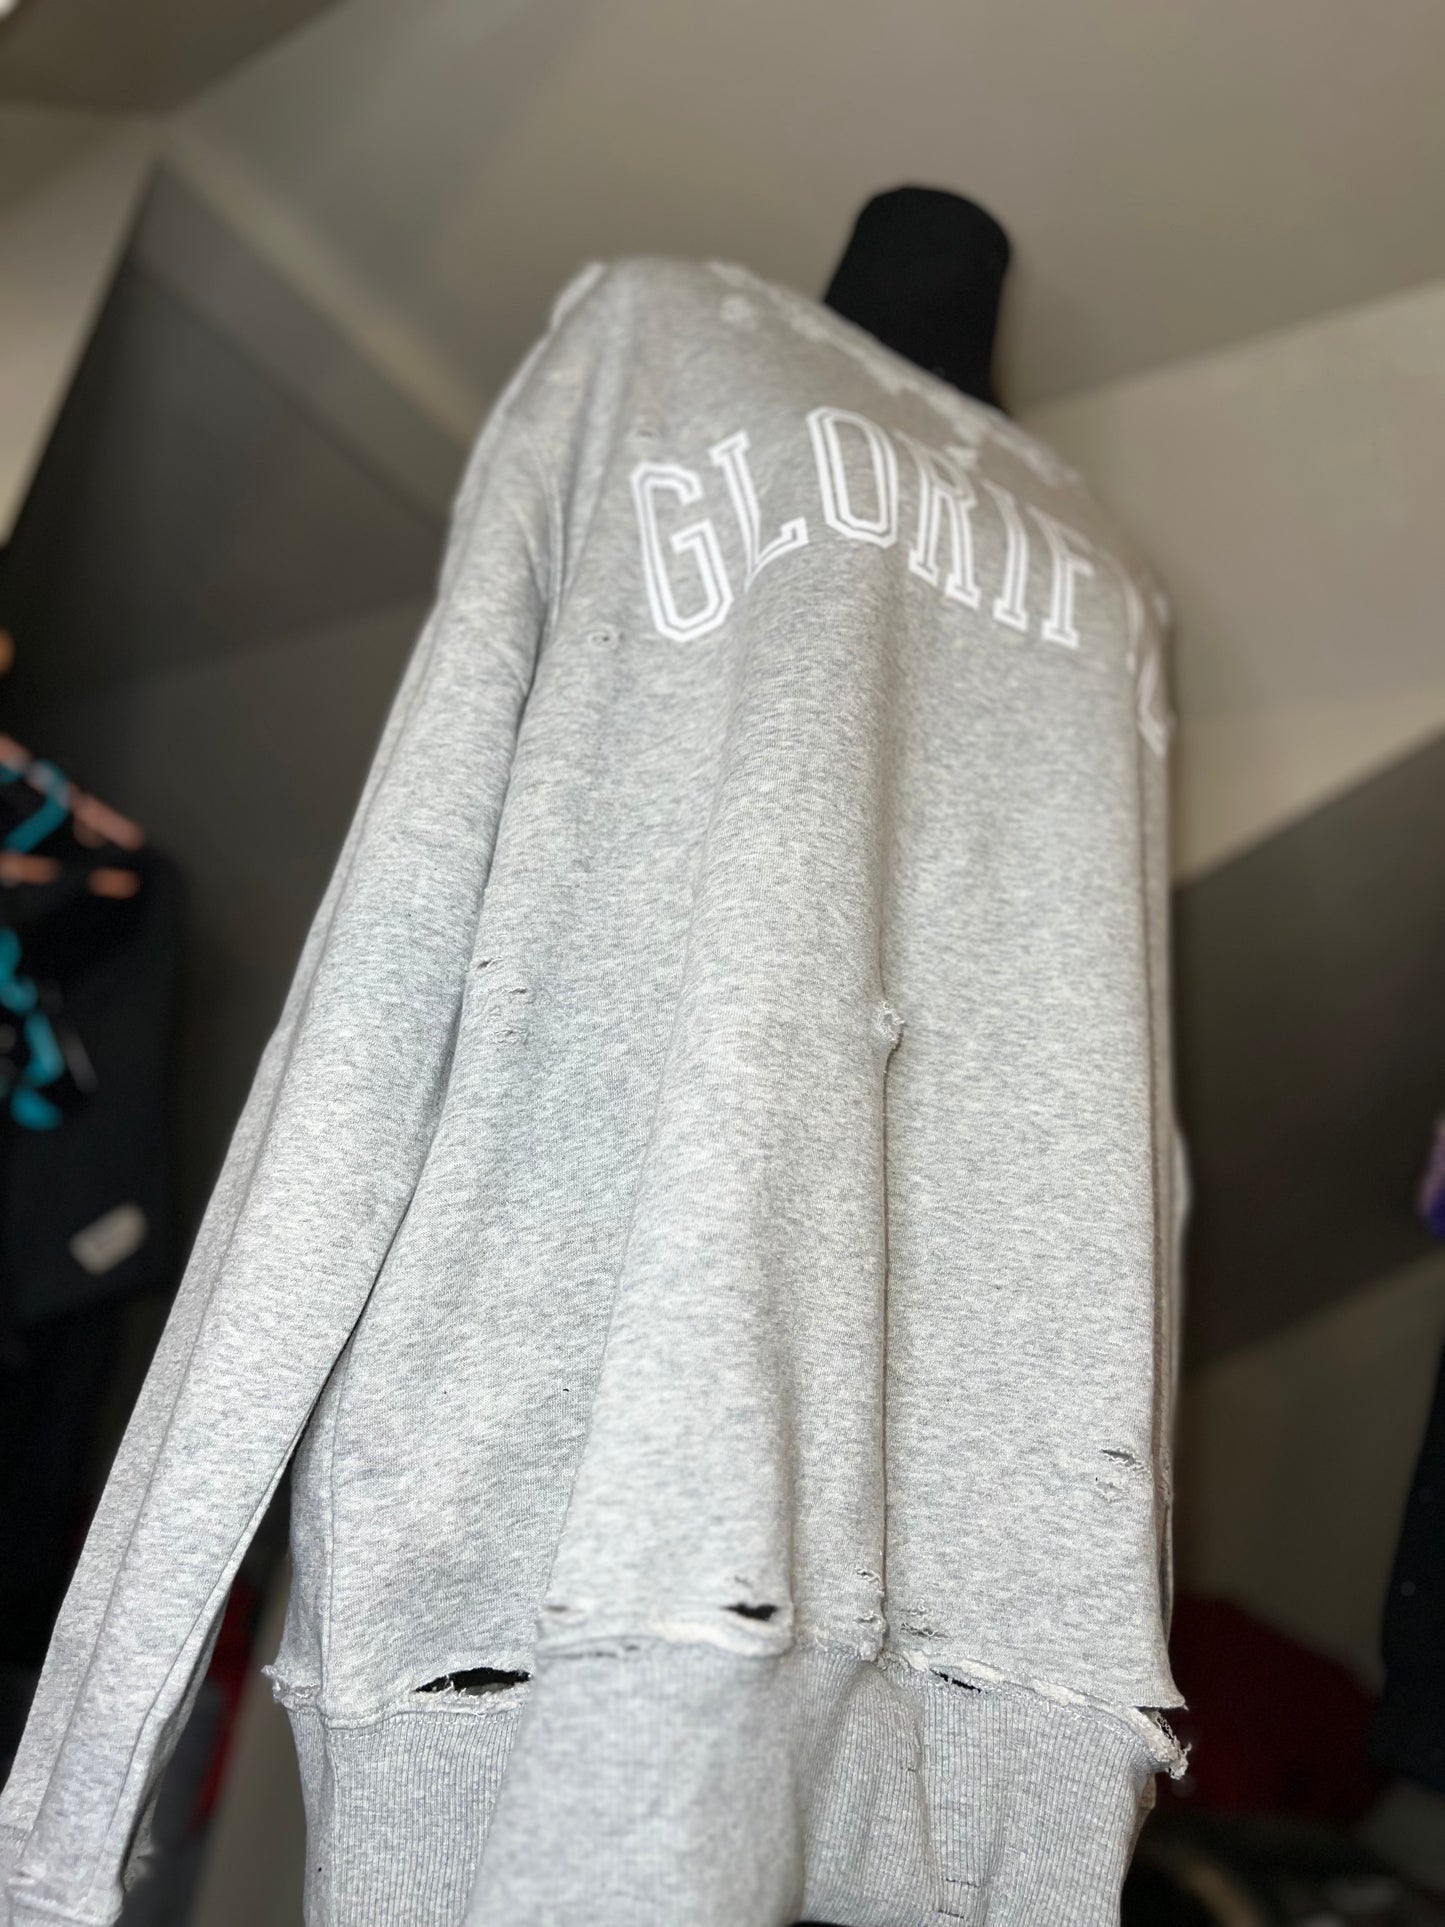 Glorified Sweatshirts/Tees